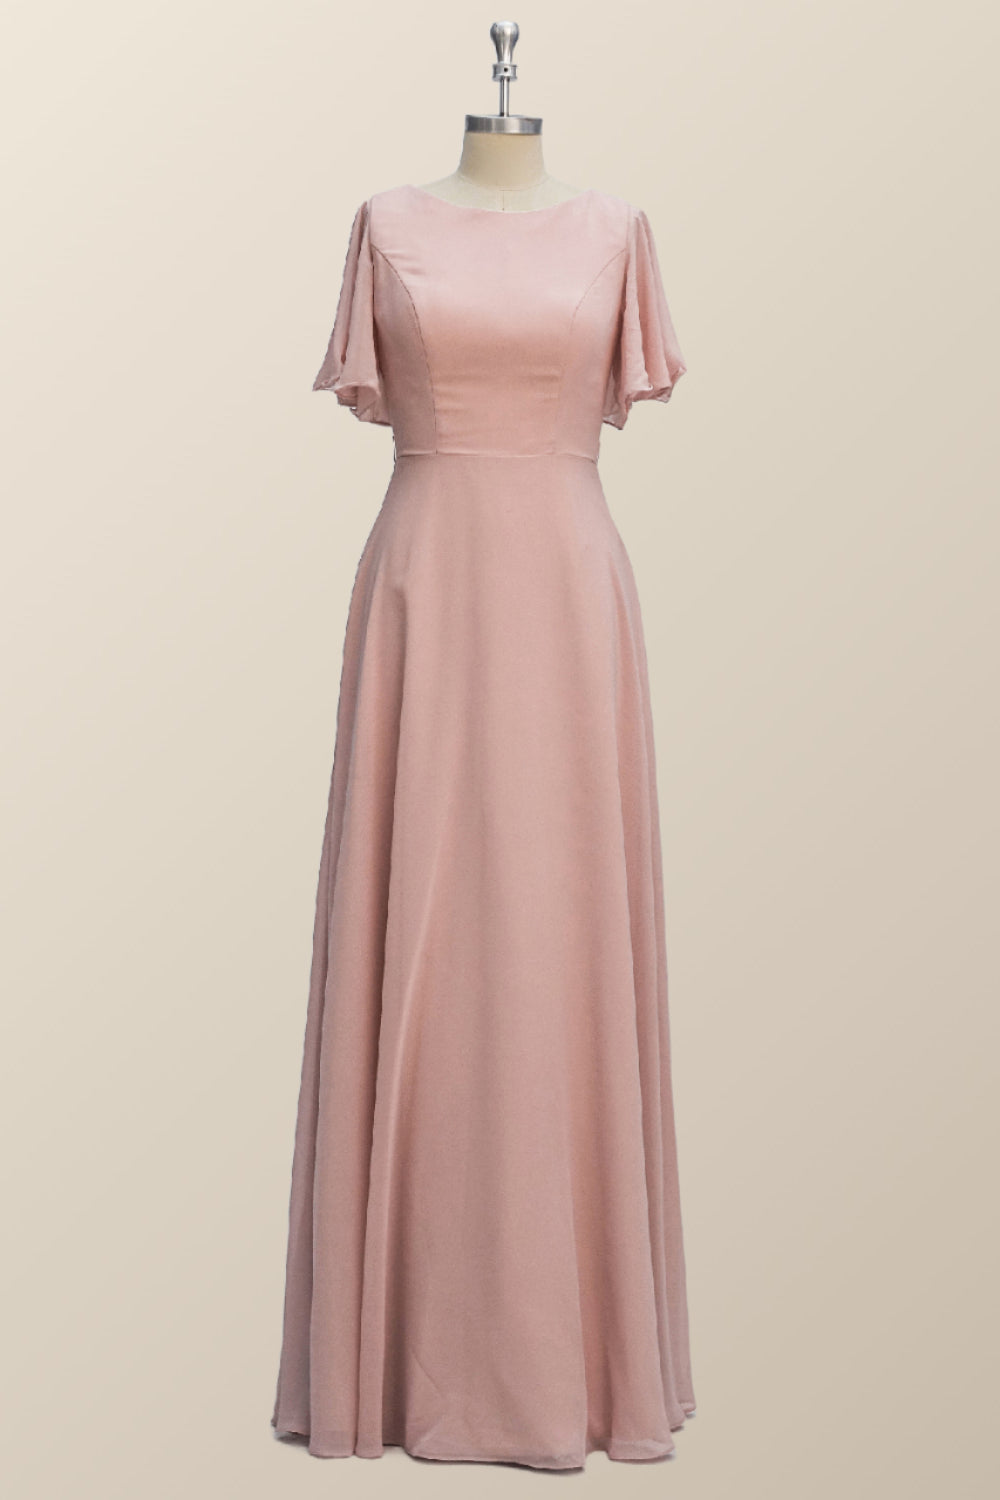 Scoop Blush Pink Chiffon A-line Long Bridesmaid Dress